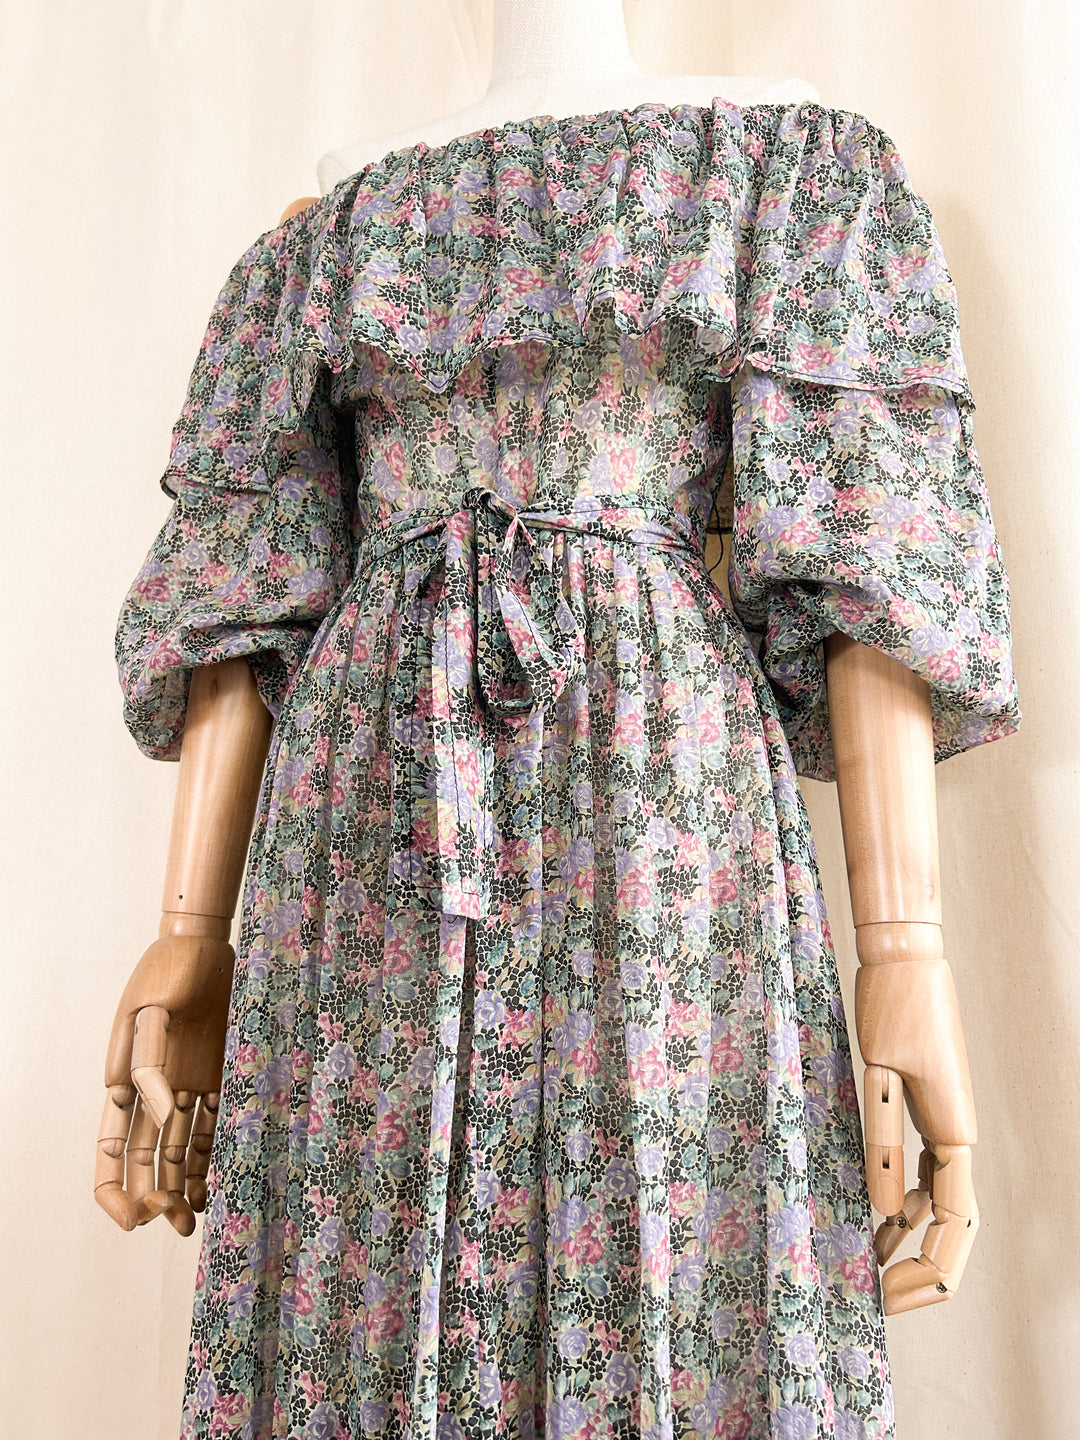 Bloomsbury ~ Precious and beautiful rare 1970s cotton romantic dream dress by Hildebrand Liberty